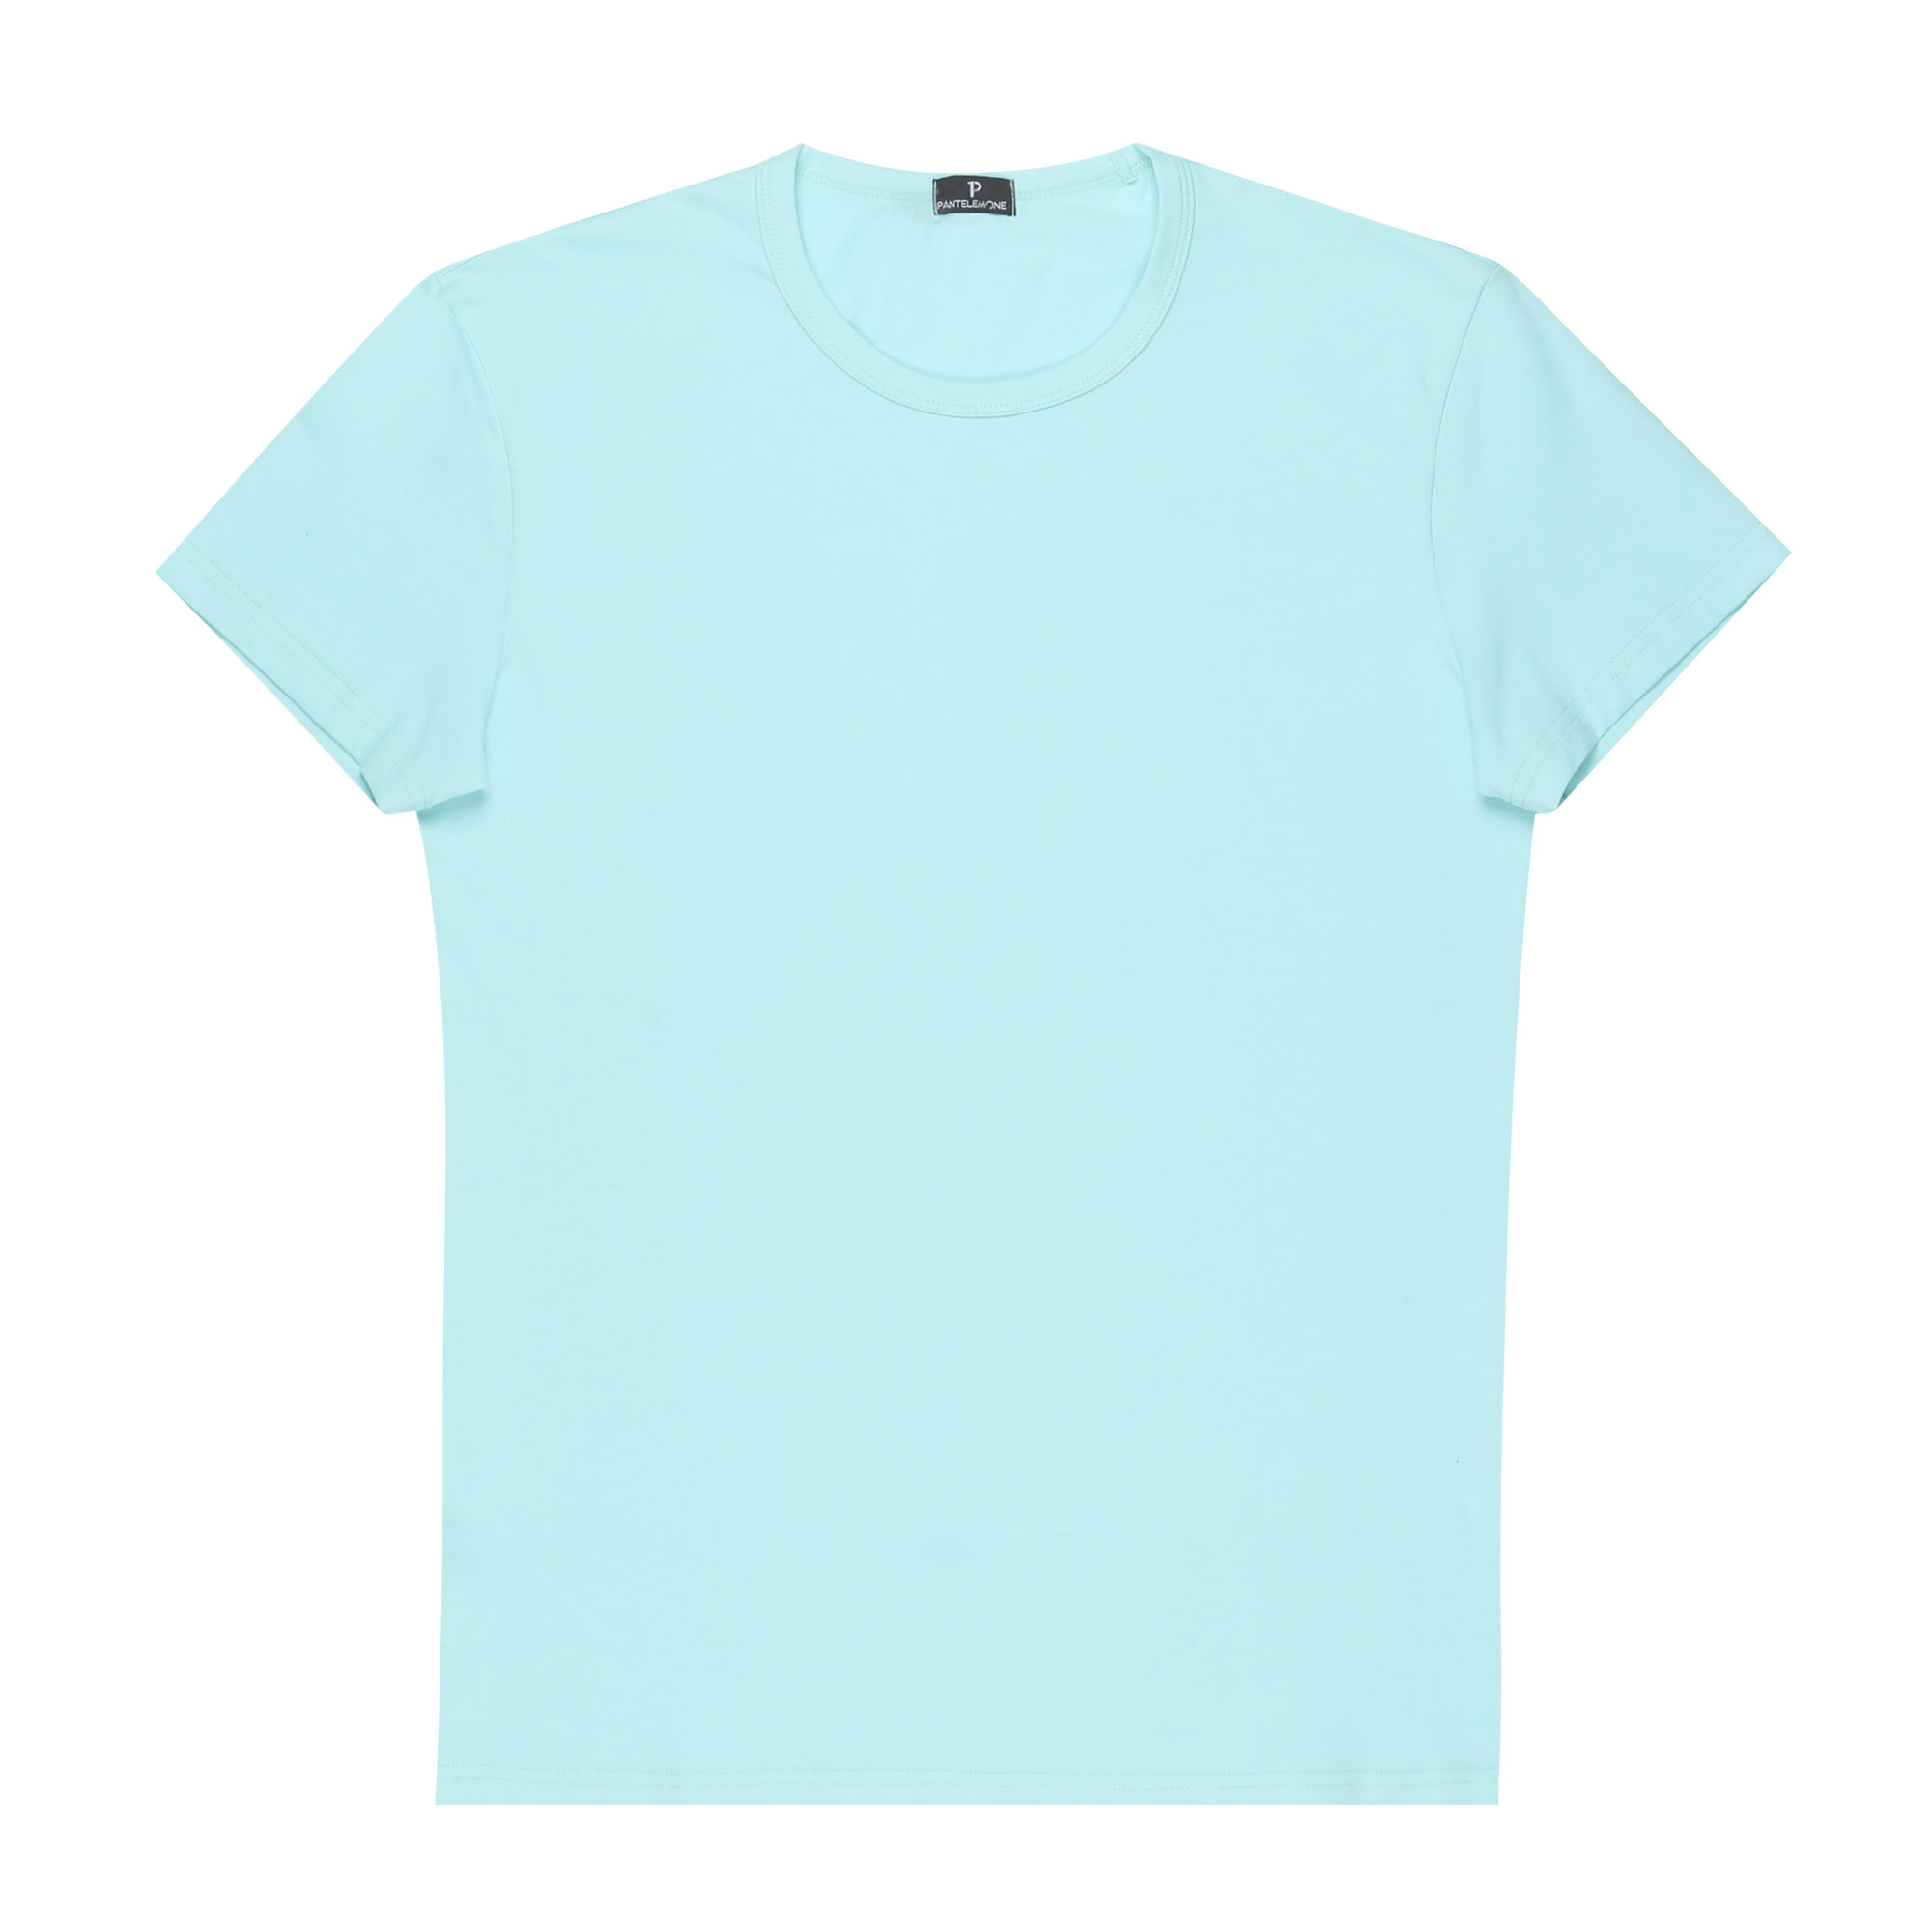 Мужская футболка Pantelemone MF-914 52 ментоловая, цвет ментоловый, размер 52 - фото 1